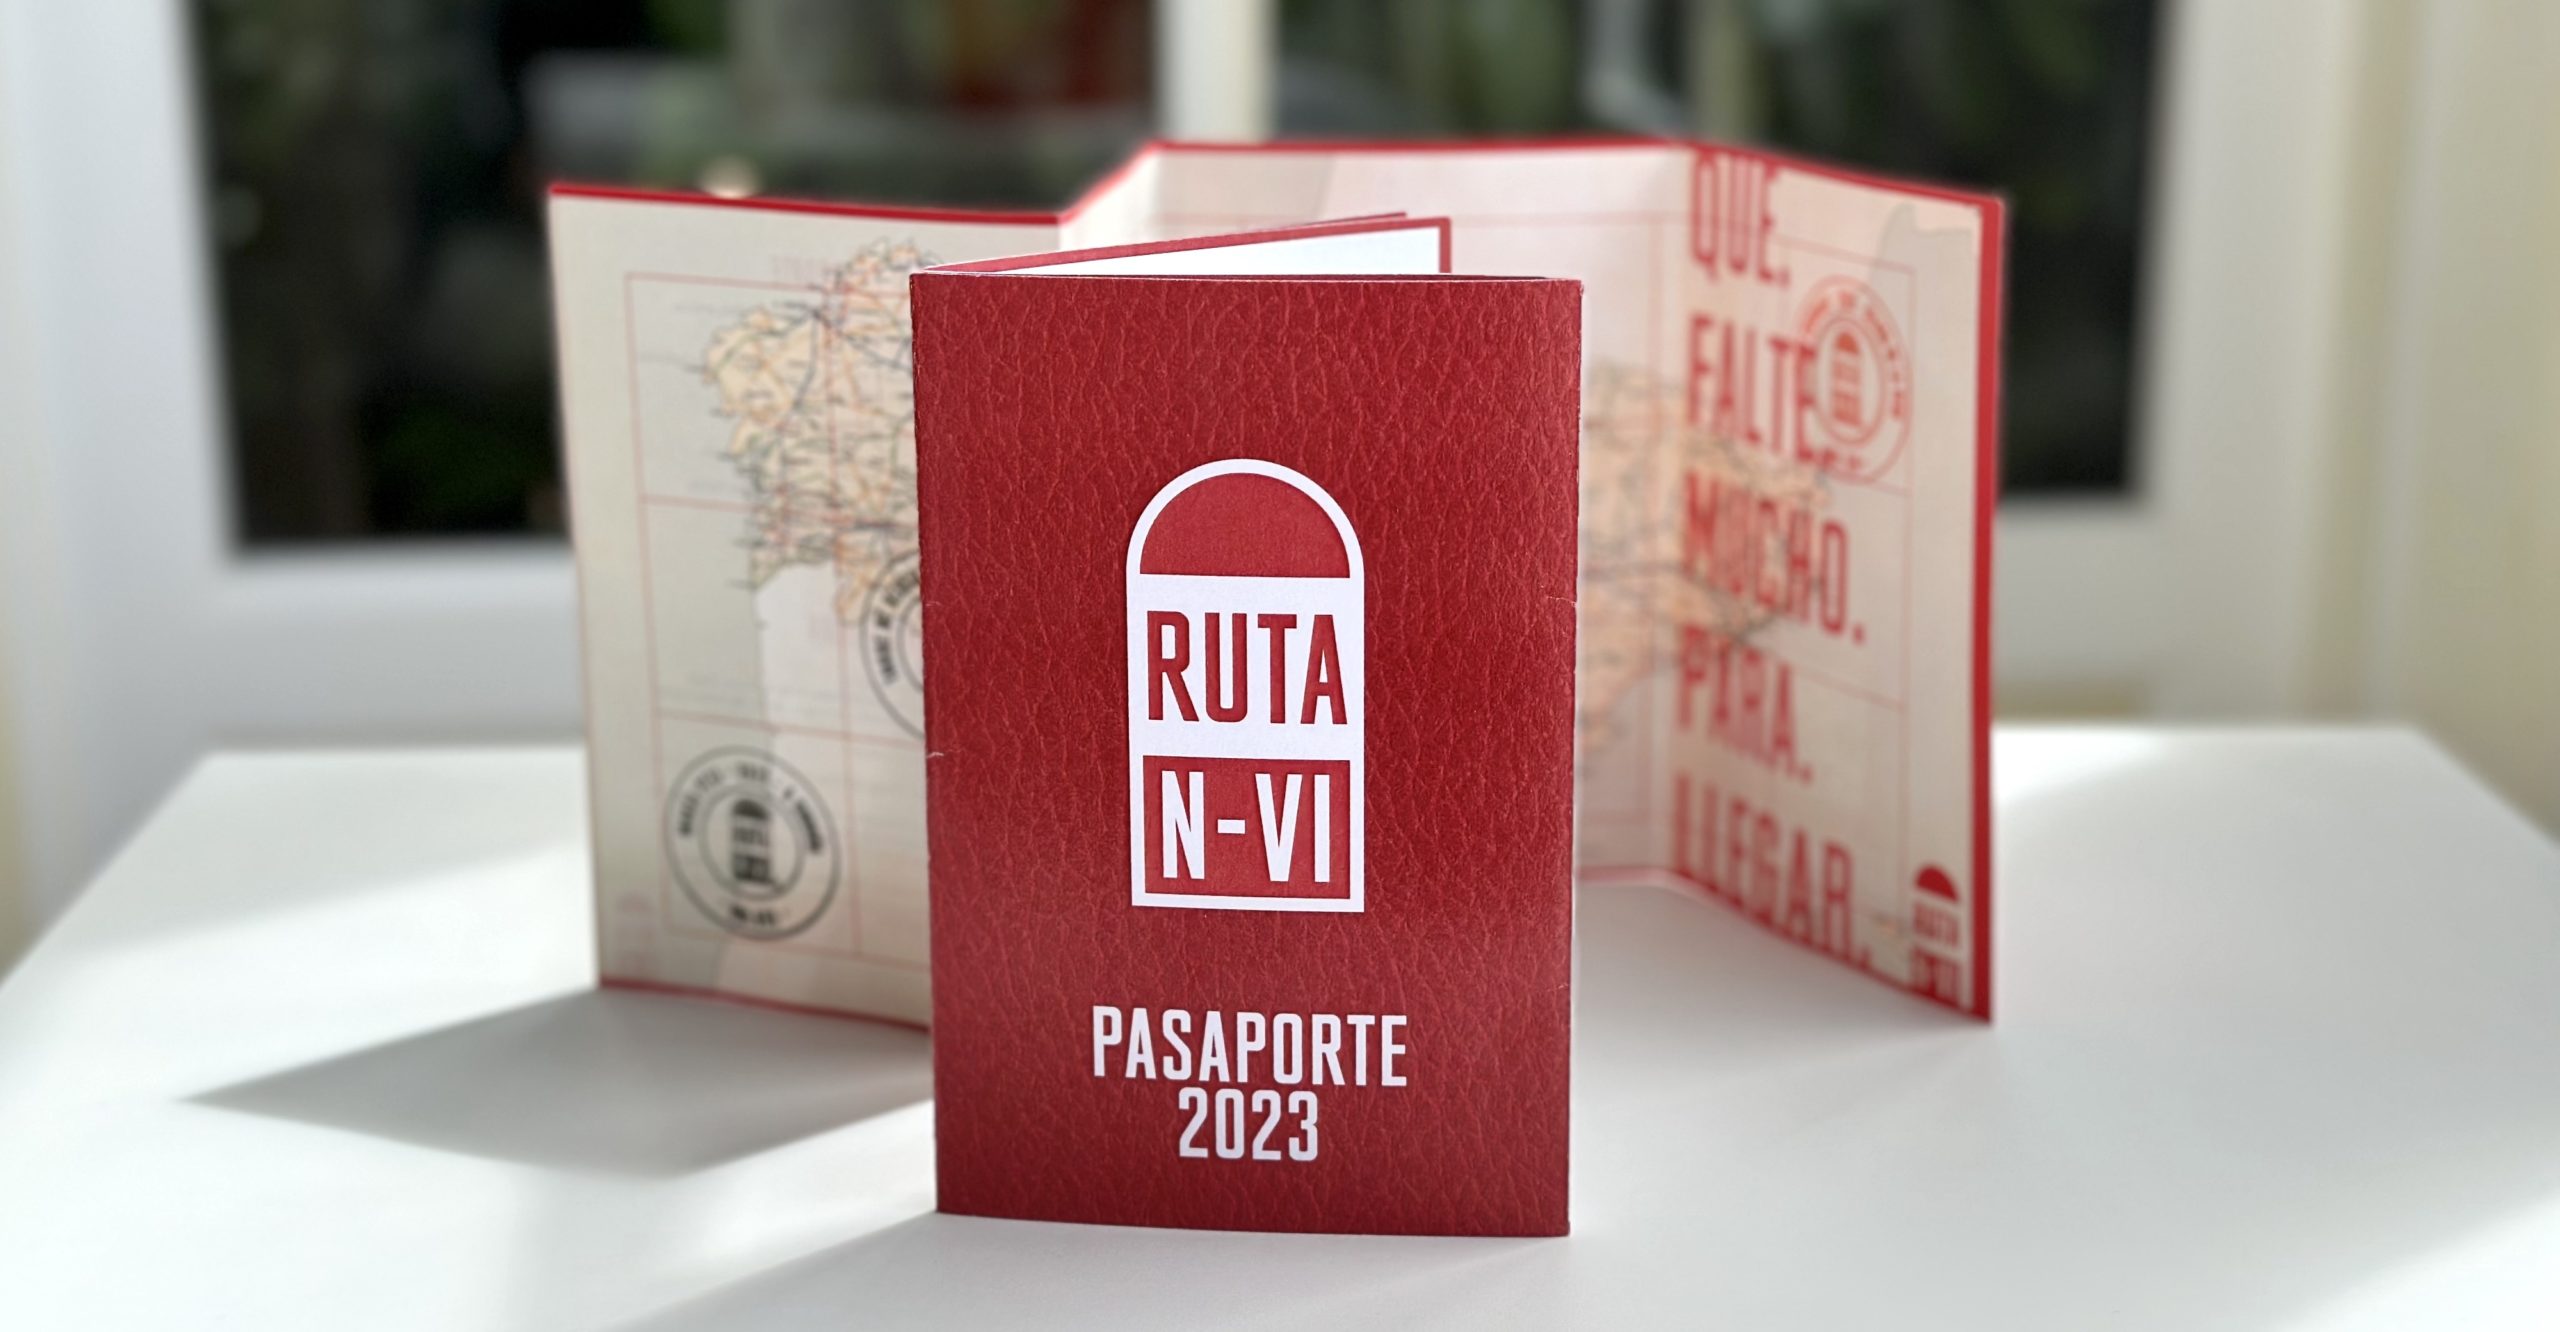 Pasaporte Ruta N-VI